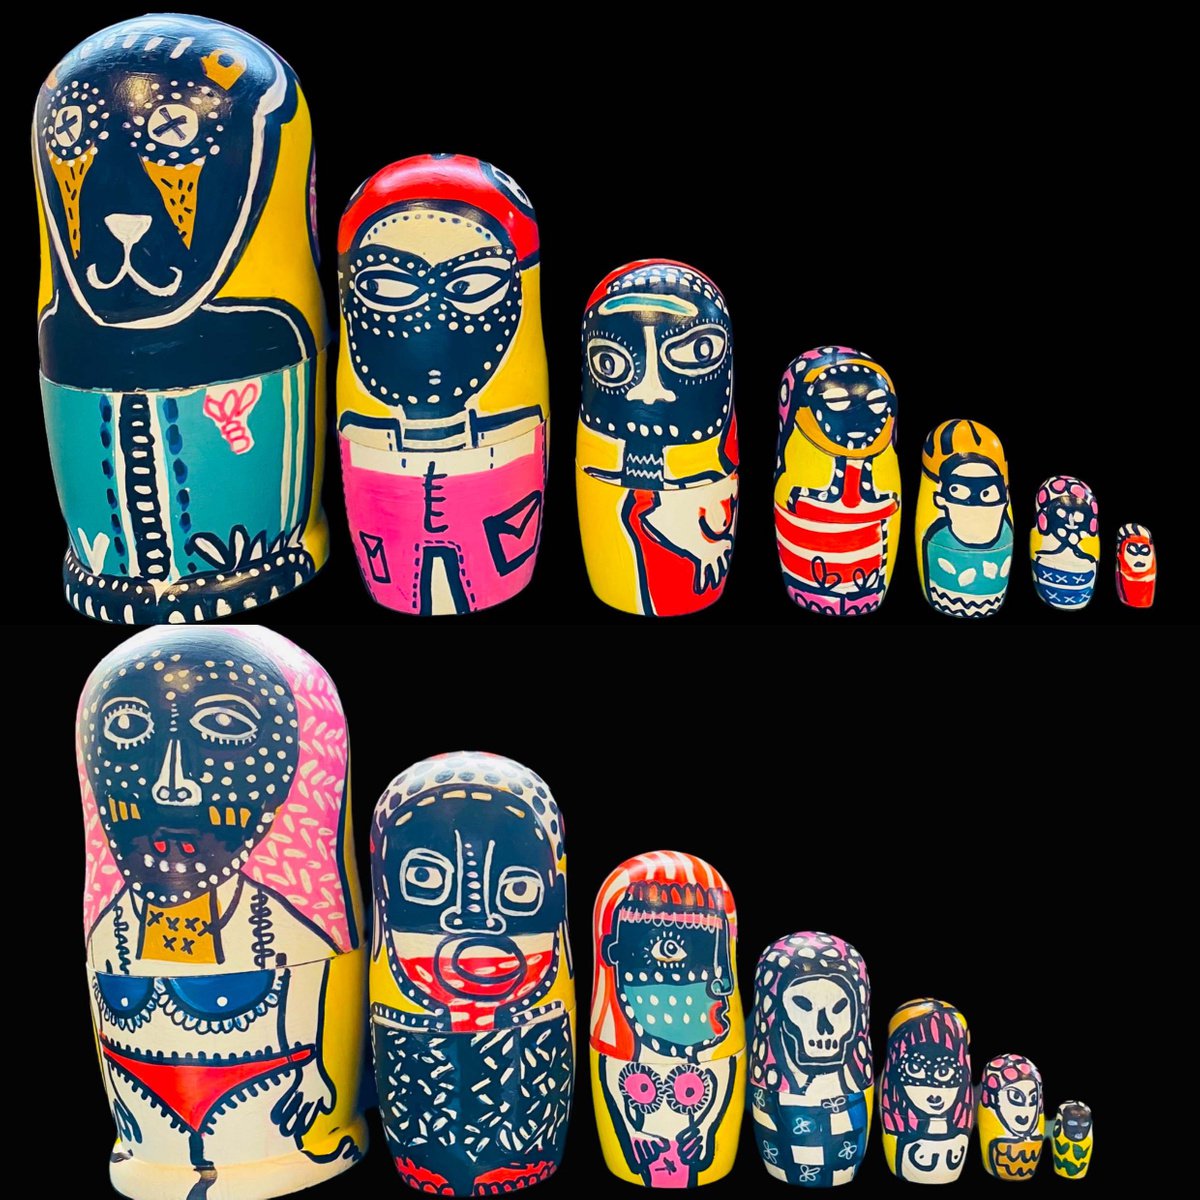 Yellow Bear Russian dolls by Georgia Sawers